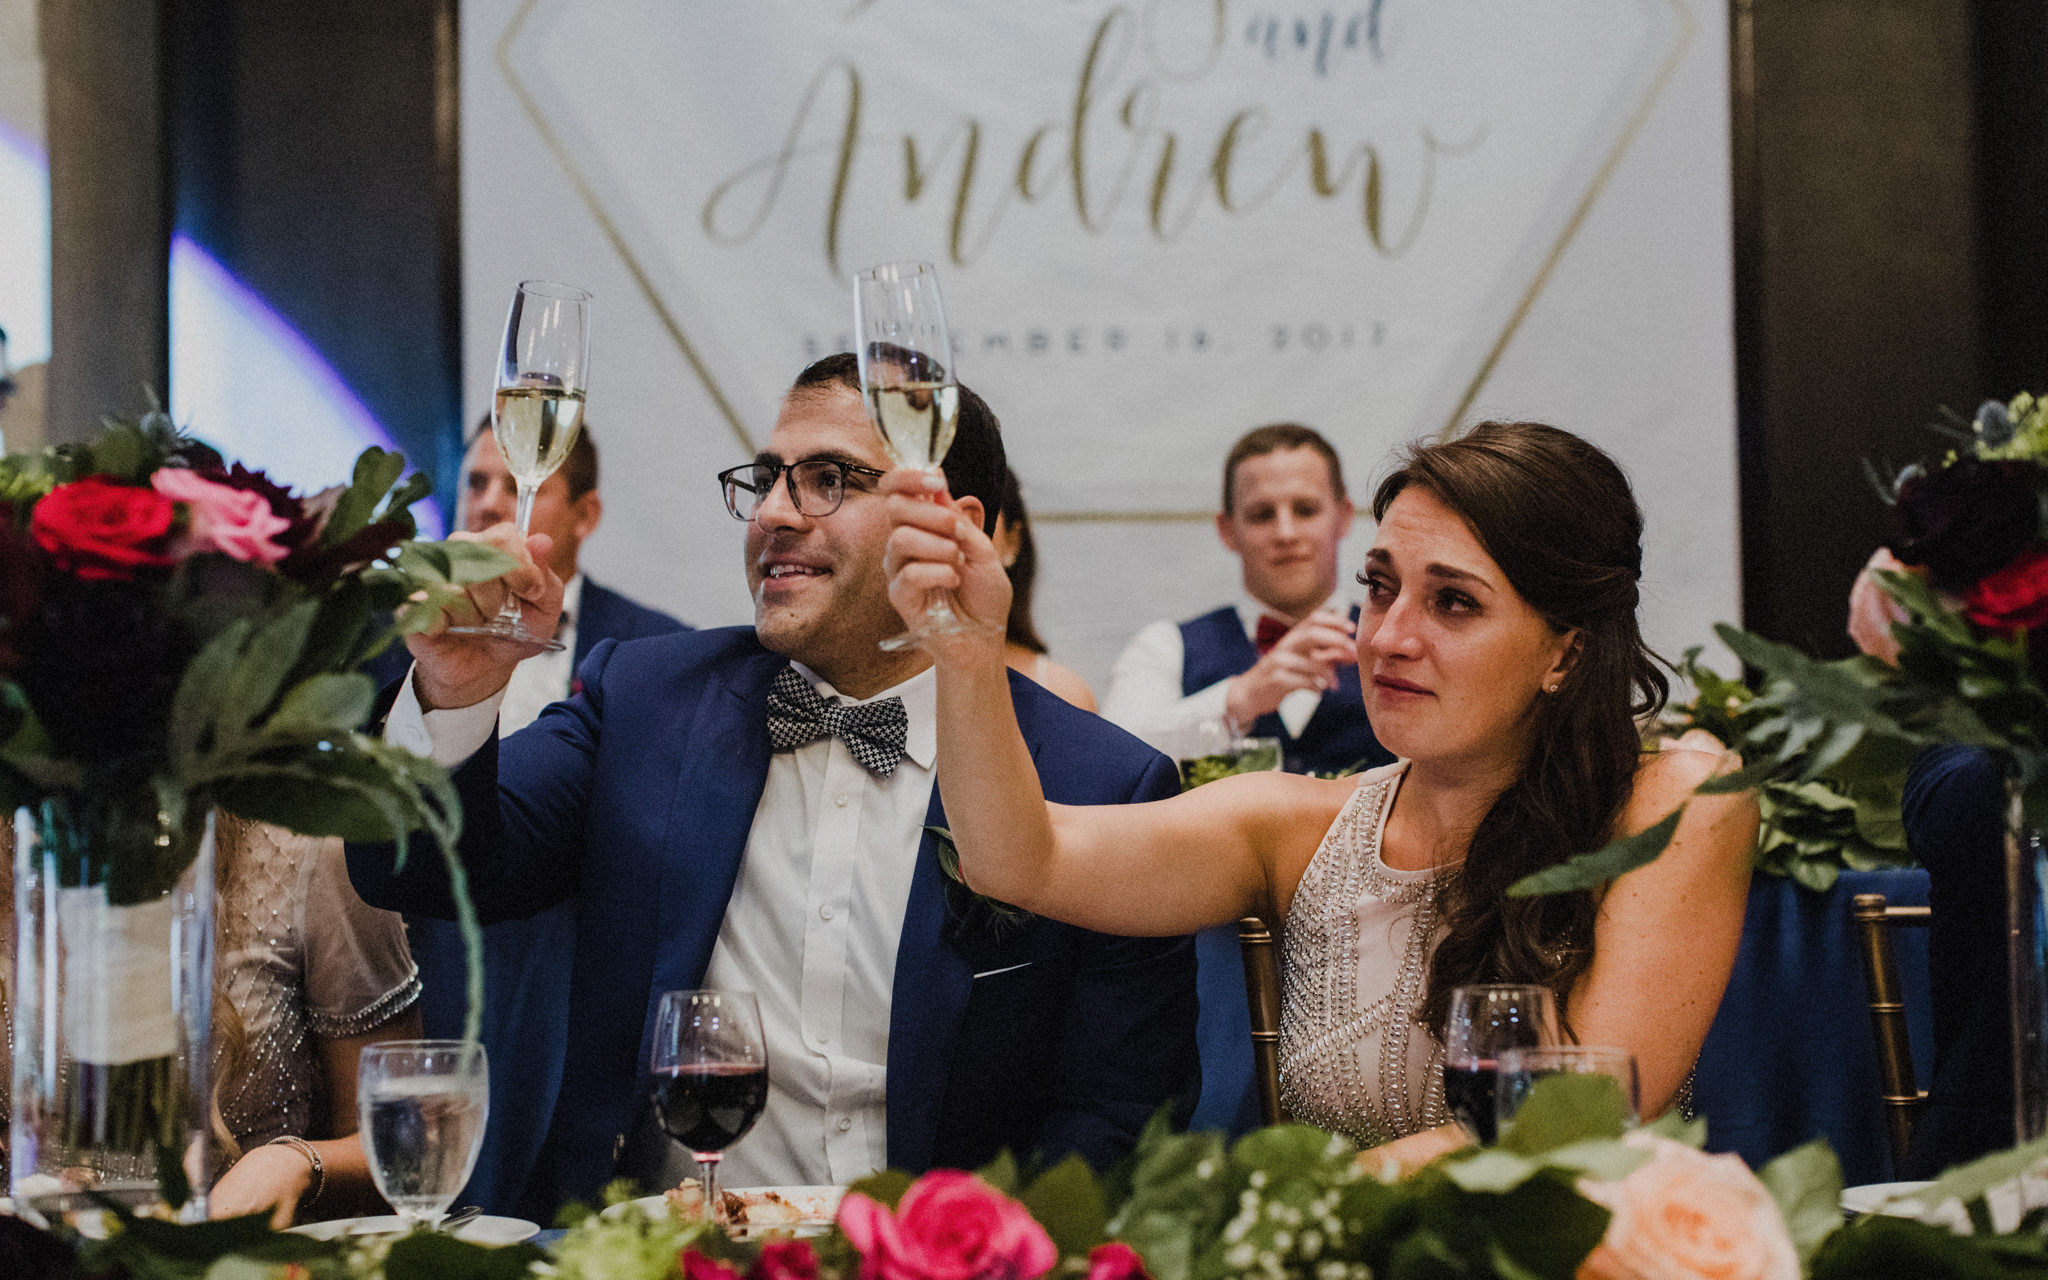 bridal party toasts at reception